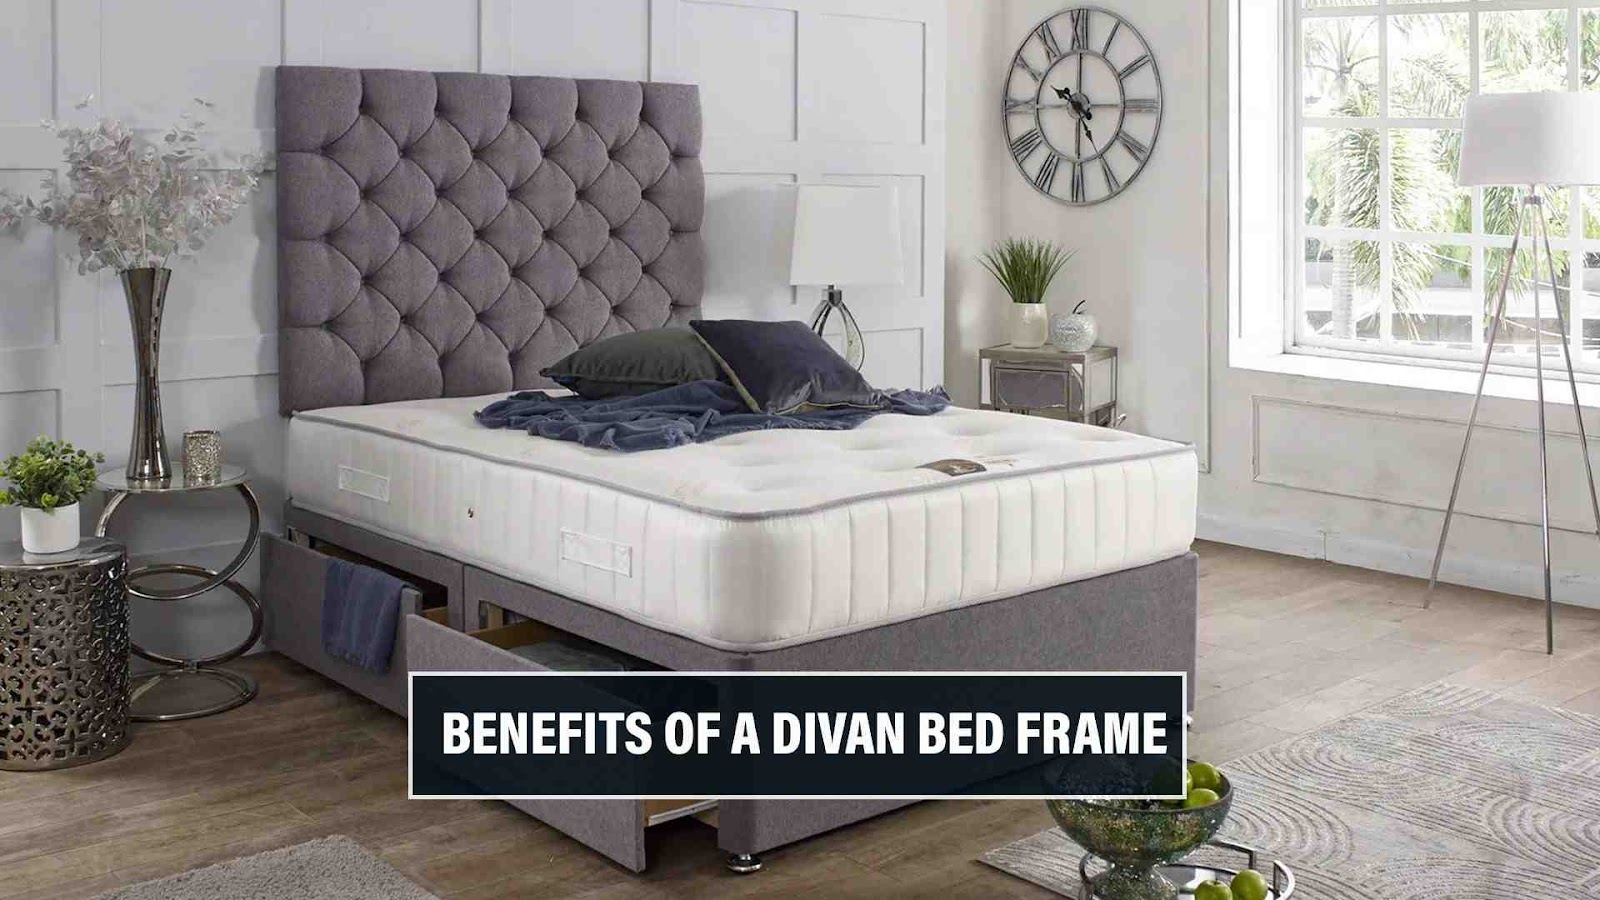 Benefits of a Divan Bed Frame